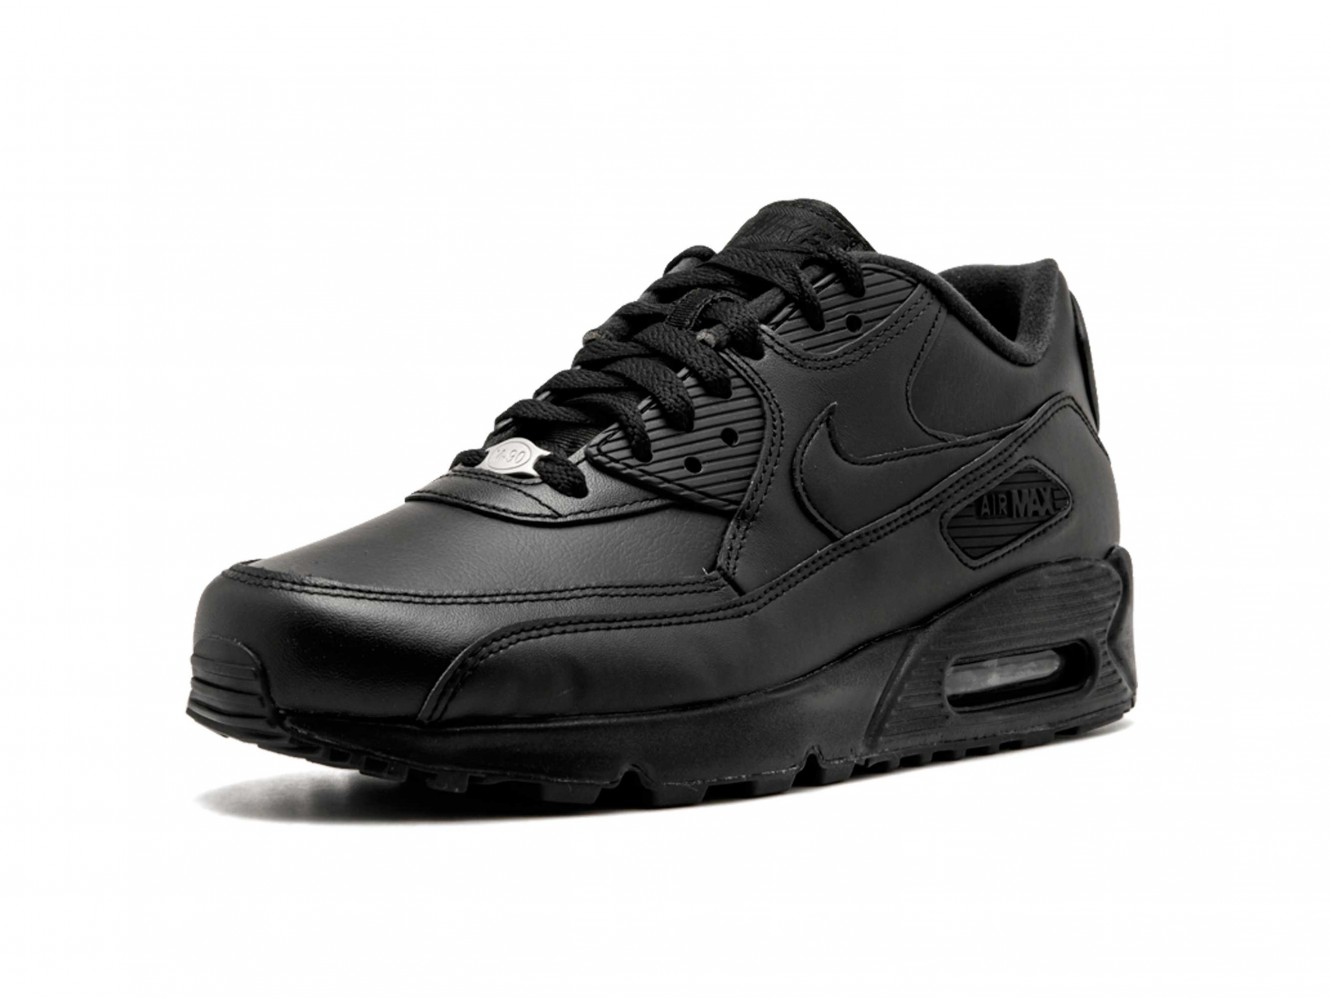  Nike Air Max 90 Leather Black